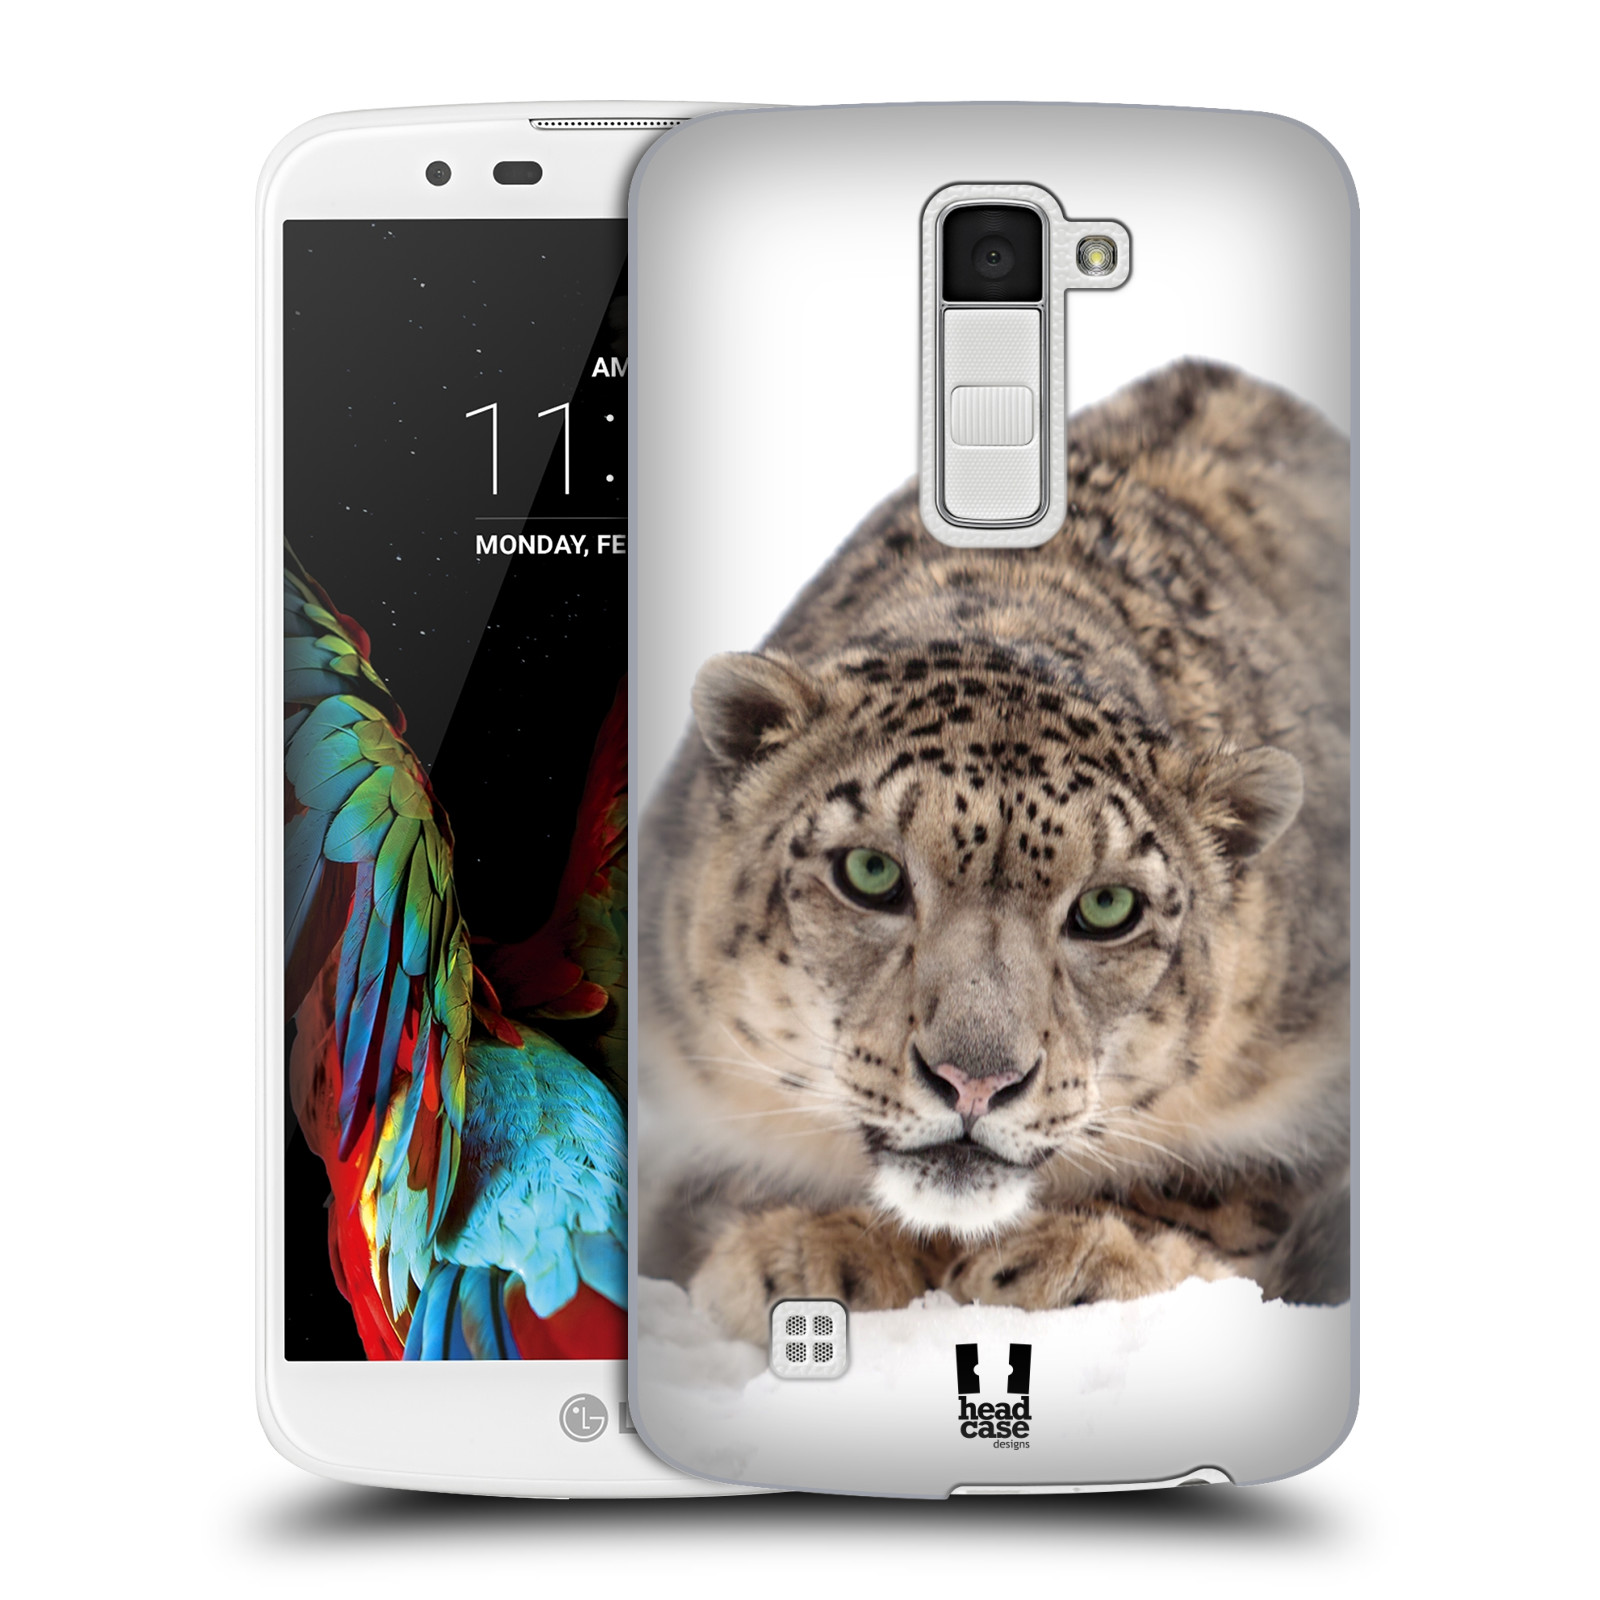 HEAD CASE plastový obal na mobil LG K10 vzor Divočina, Divoký život a zvířata foto SNĚŽNÝ LEOPARD